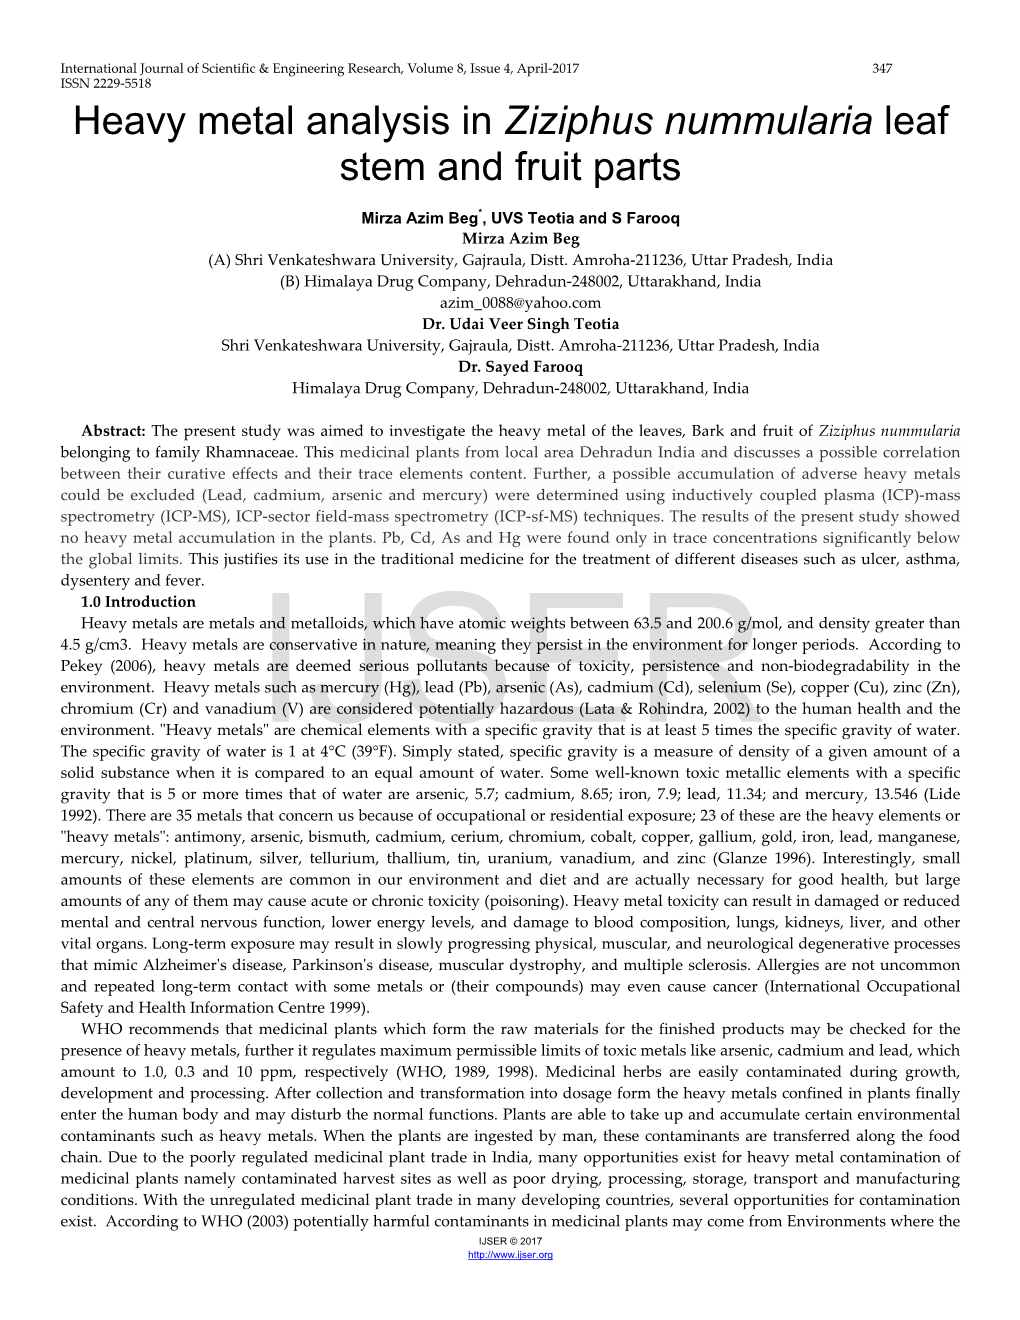 Heavy Metal Analysis in Ziziphus Nummularia Leaf Stem and Fruit Parts